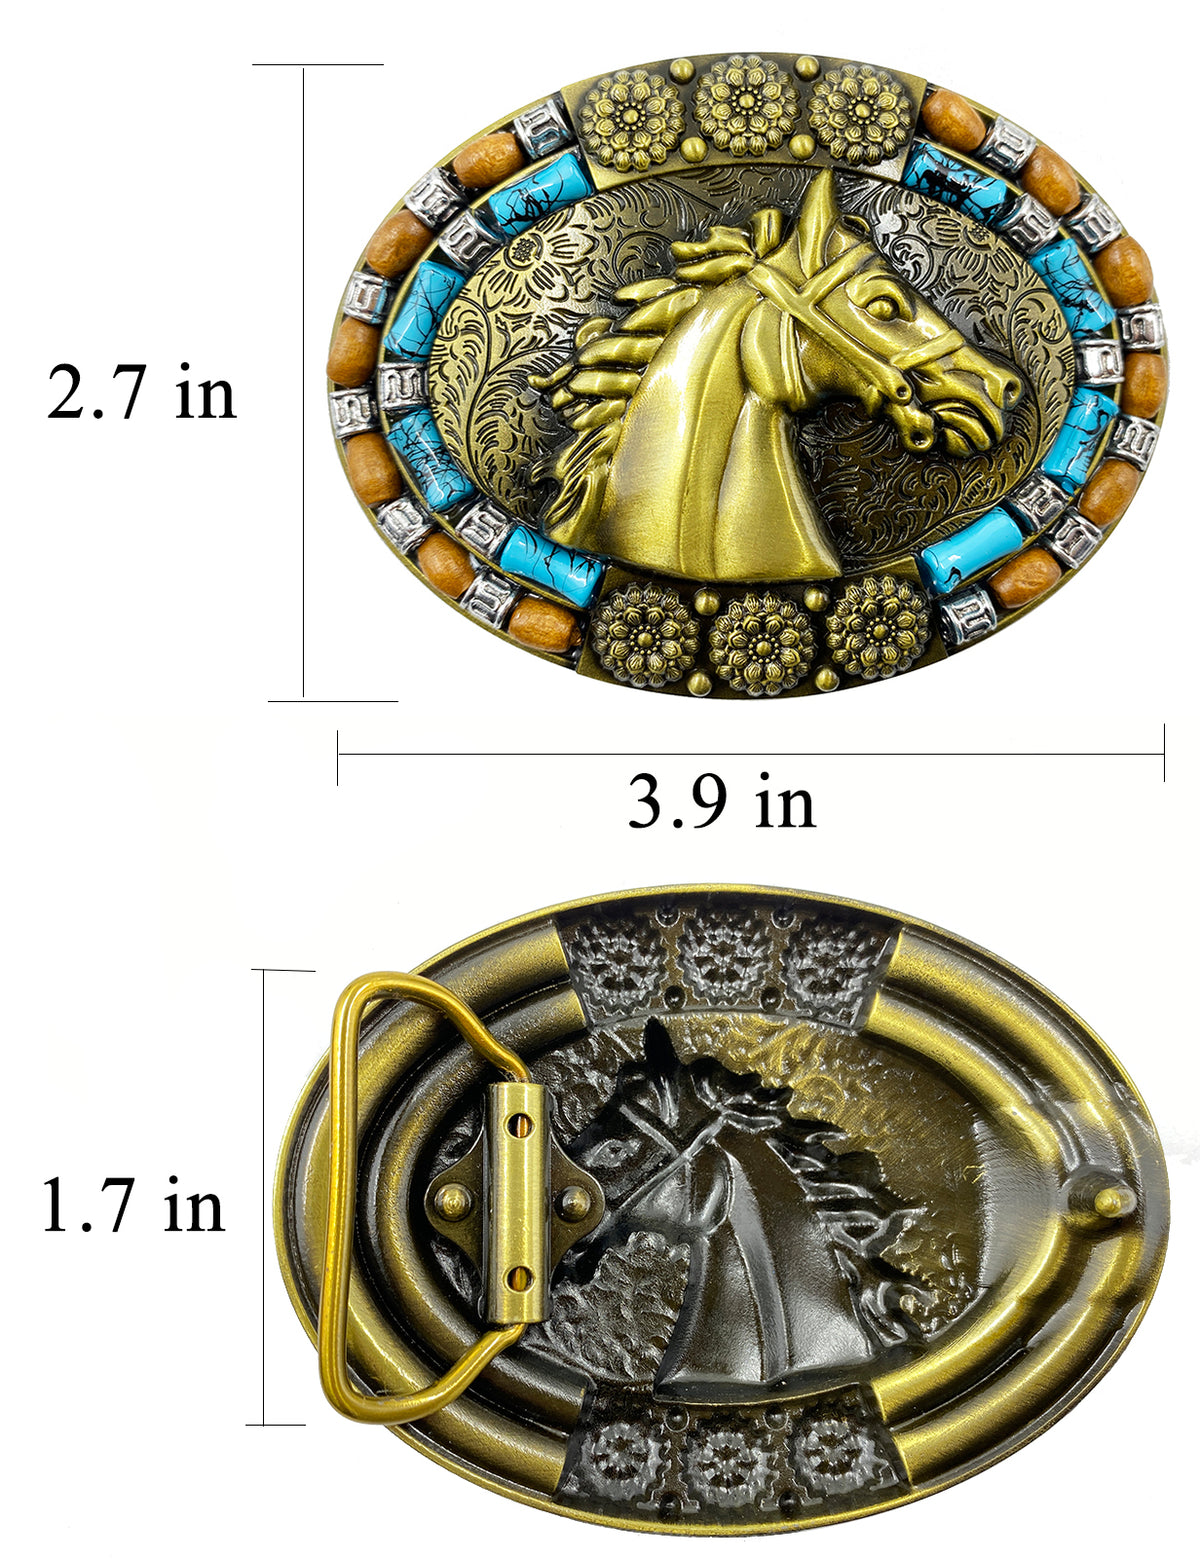 Fivela de cinto de cavalo turquesa ocidental TOPACC oval cobre/bronze